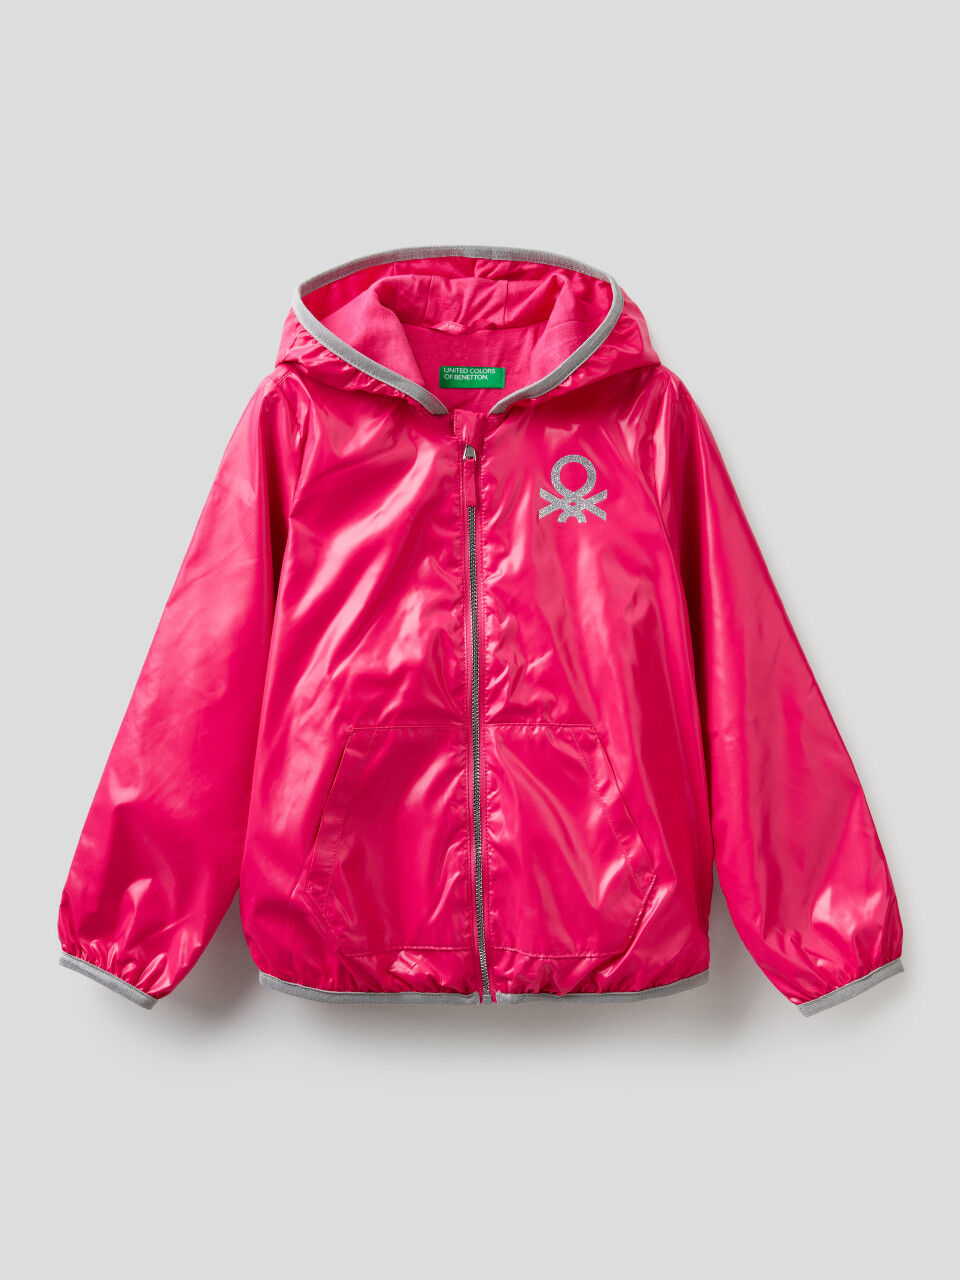 United Colors of Benetton Girls Jacket Coat